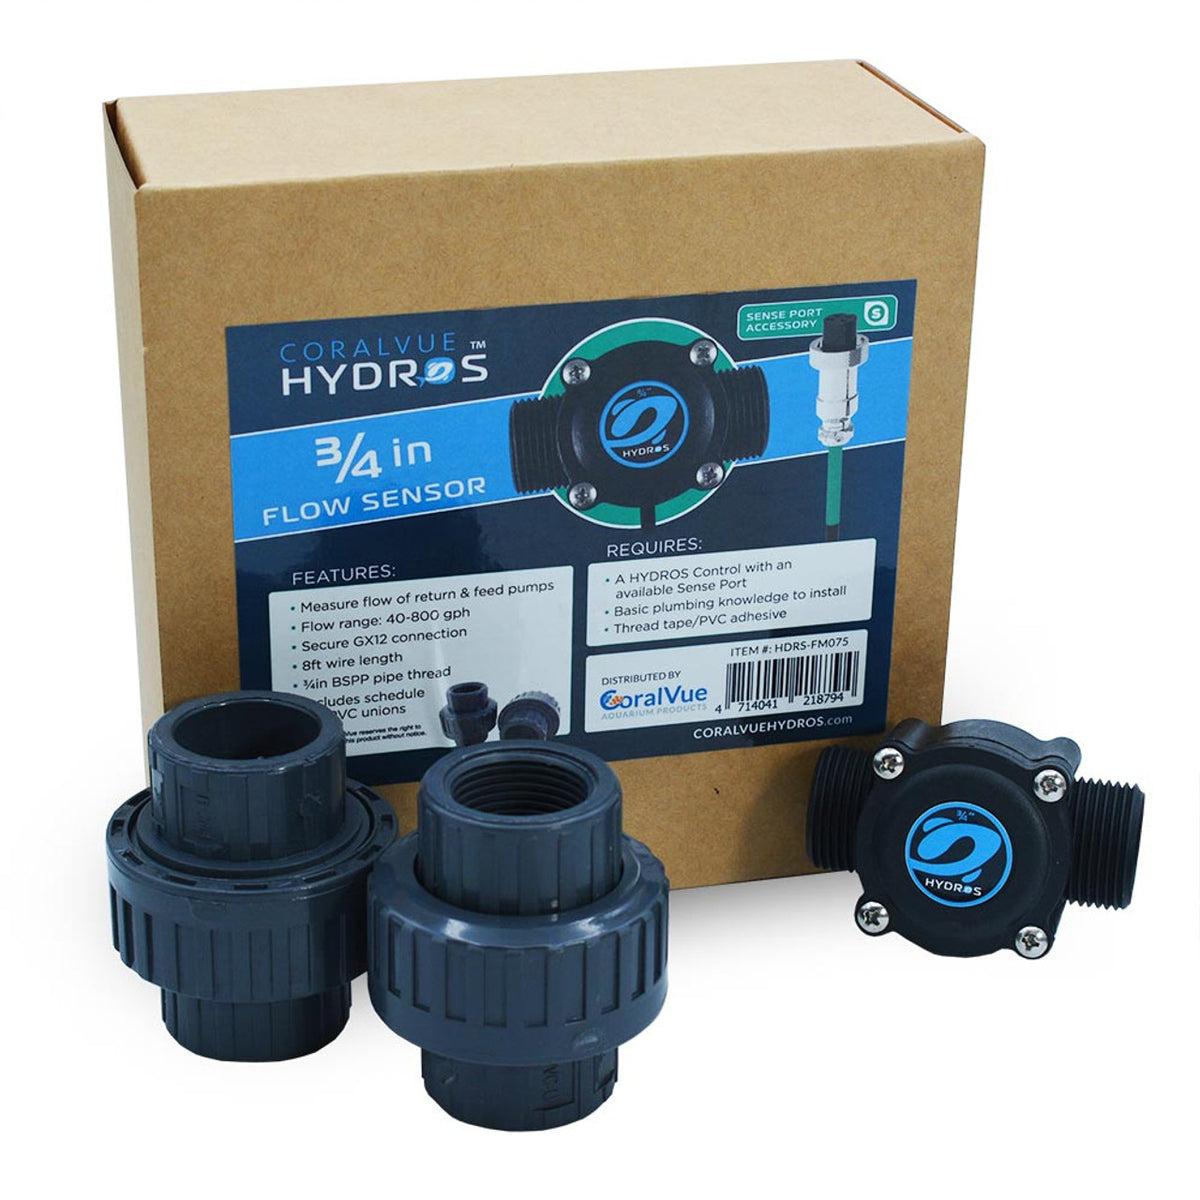 HYDROS Flow Sensor